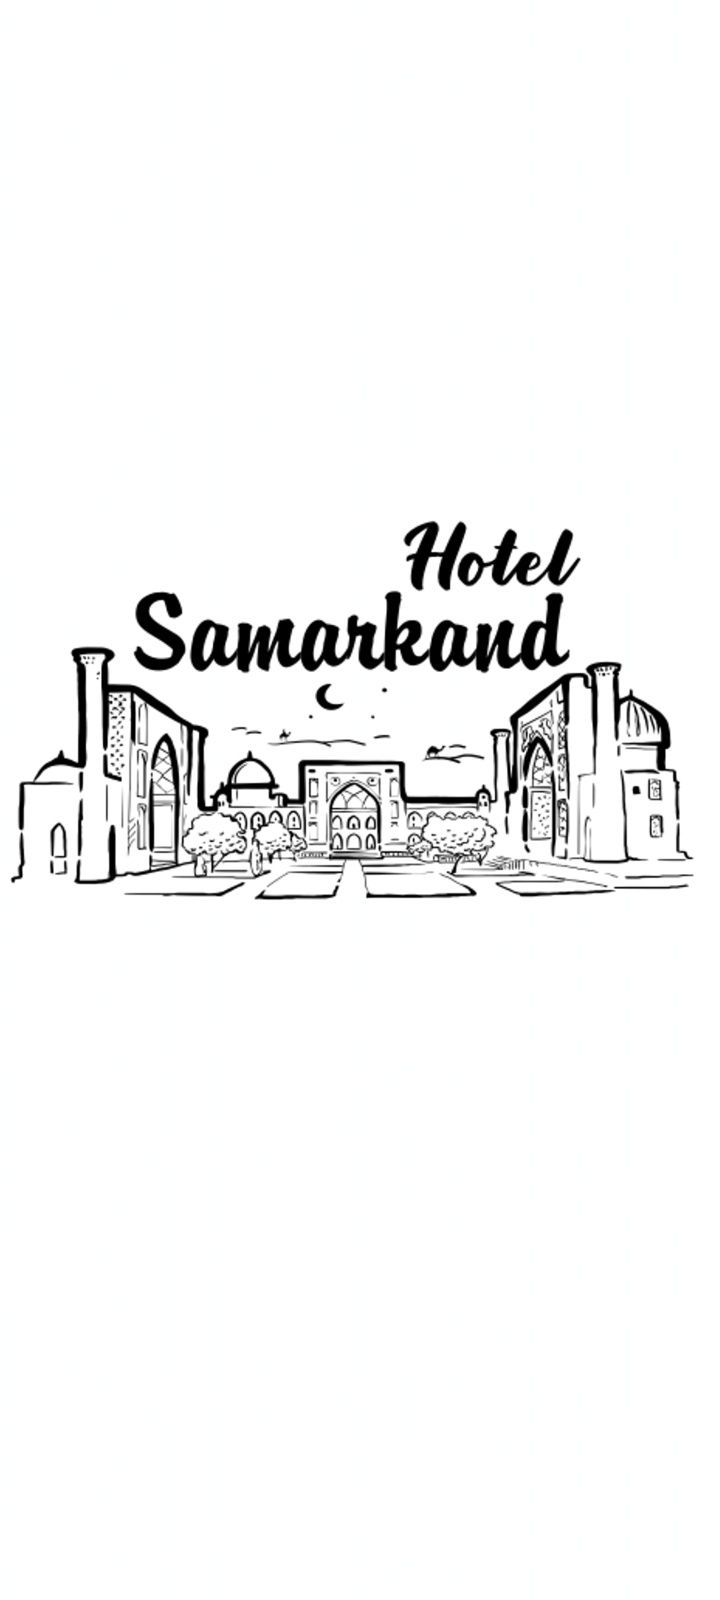 Hotel SAMARKAND Гостиница Отель Мехмонхона Хостел Hostel Gastinitsa